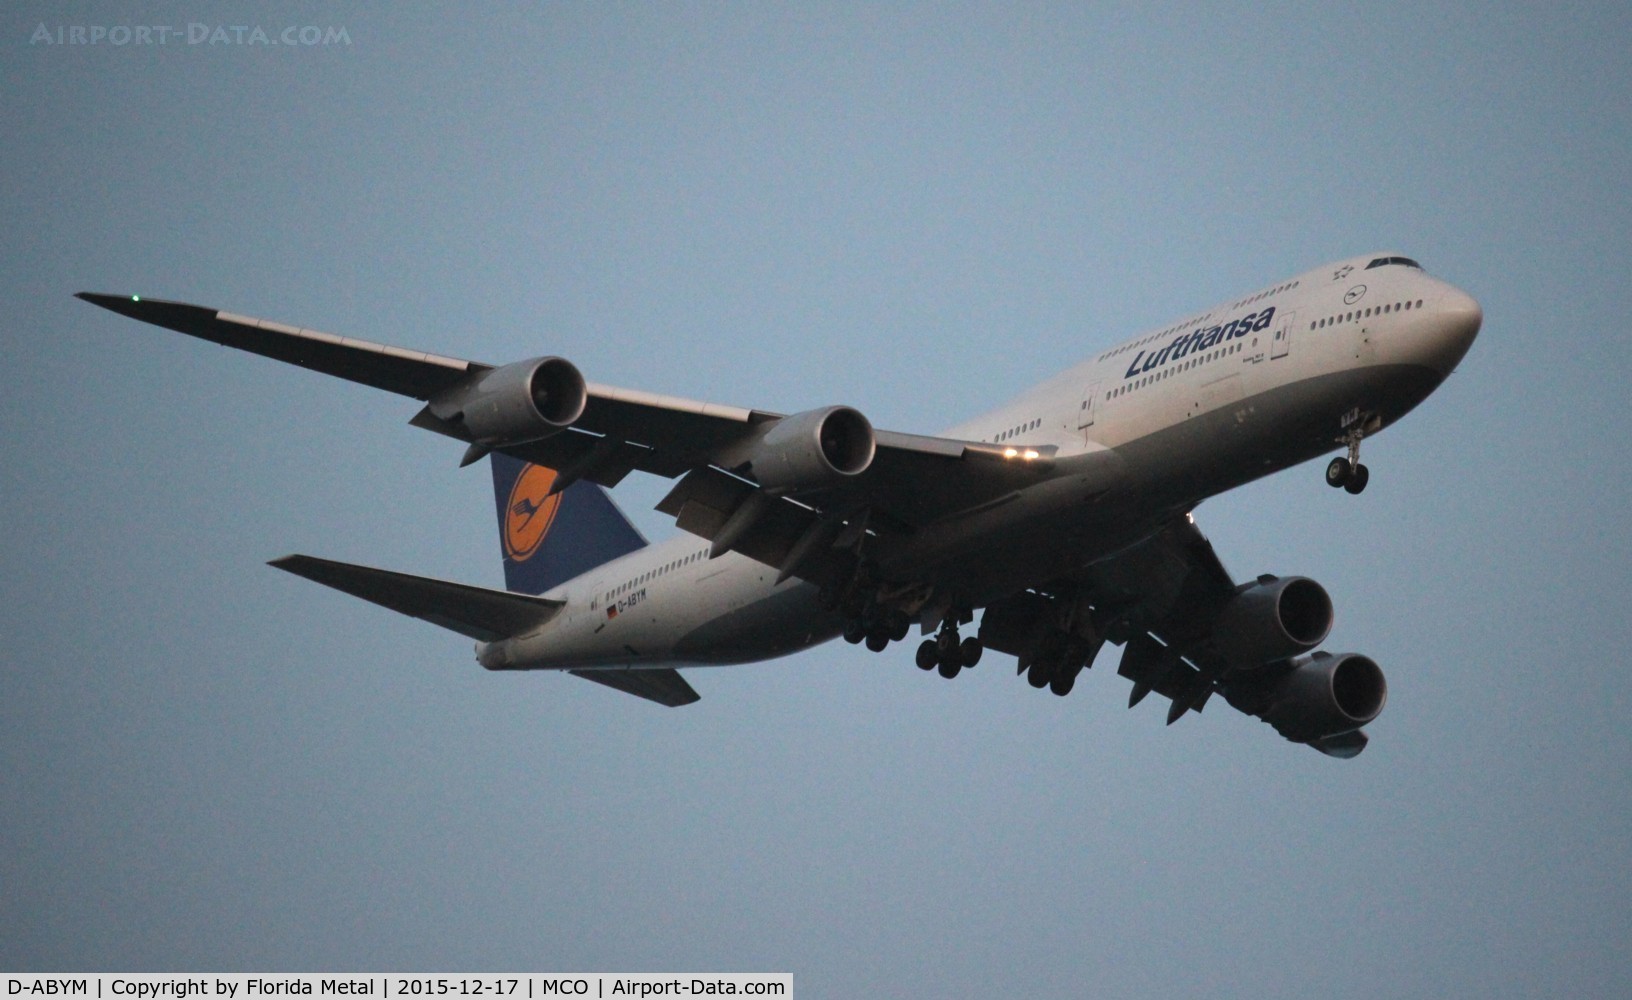 D-ABYM, 2014 Boeing 747-830 C/N 37837, Lufthansa